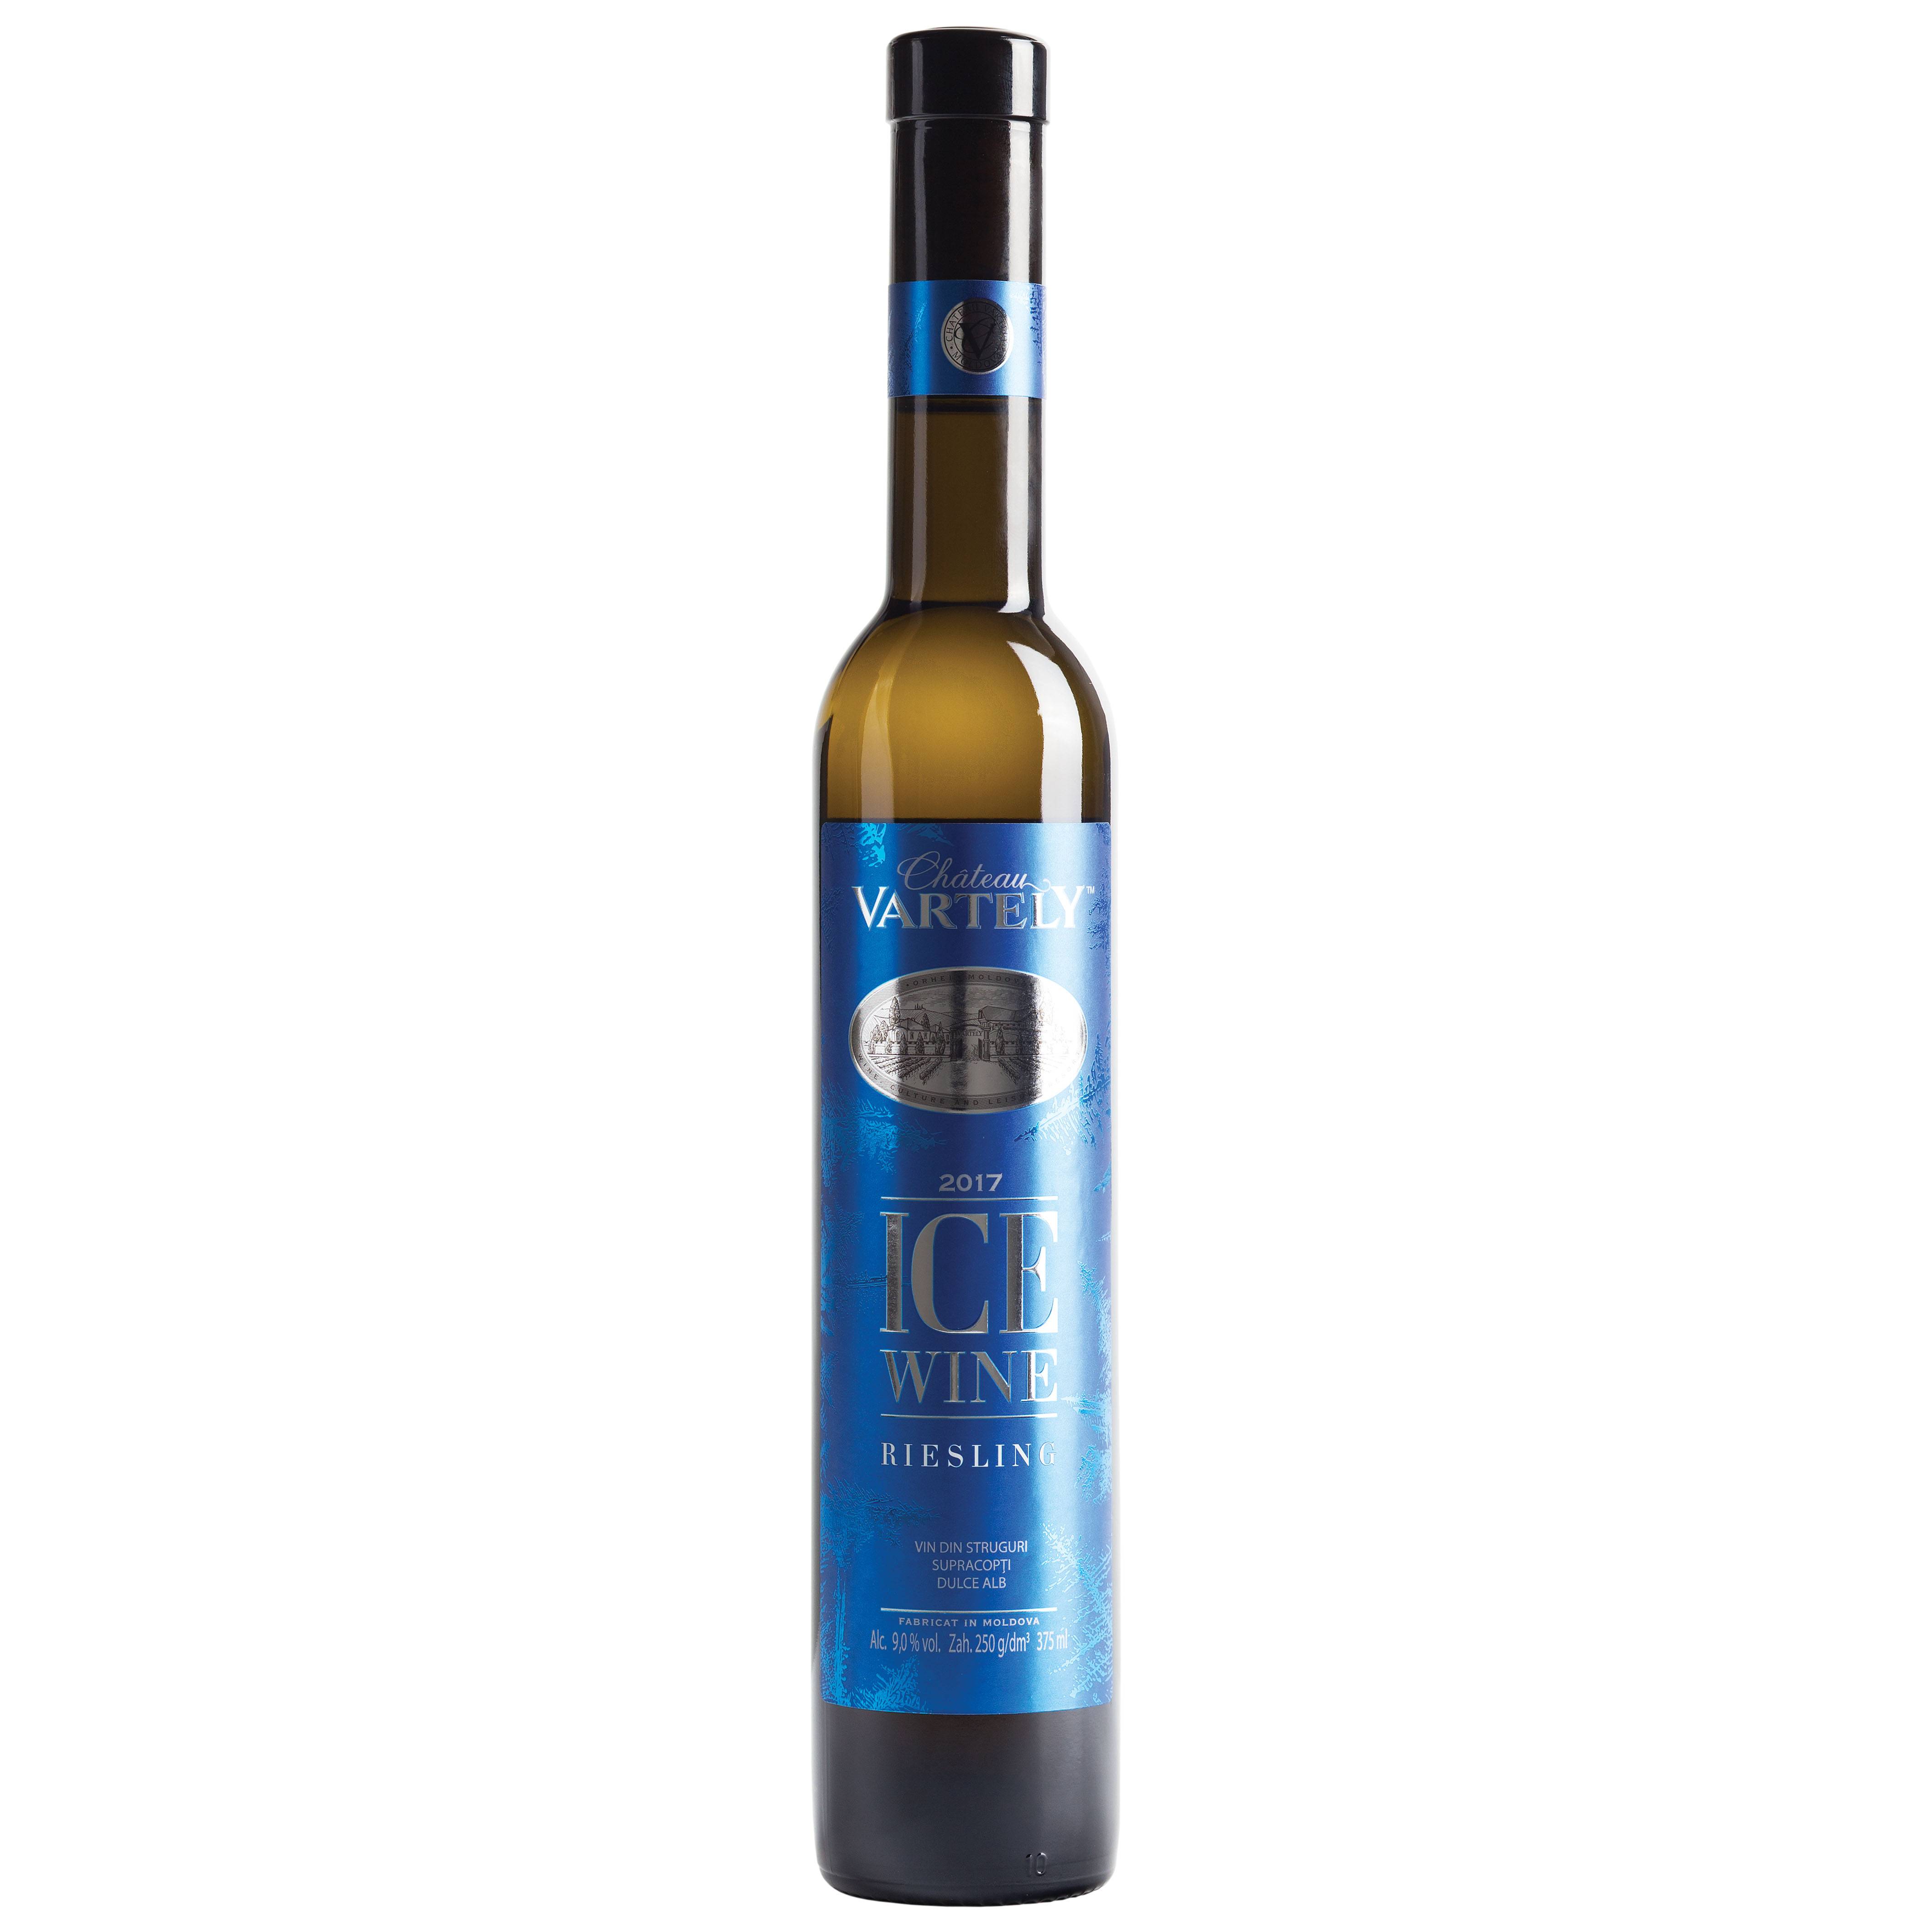 Vin Ice Wine Riesling, Alc 9.0%, 0.375ml